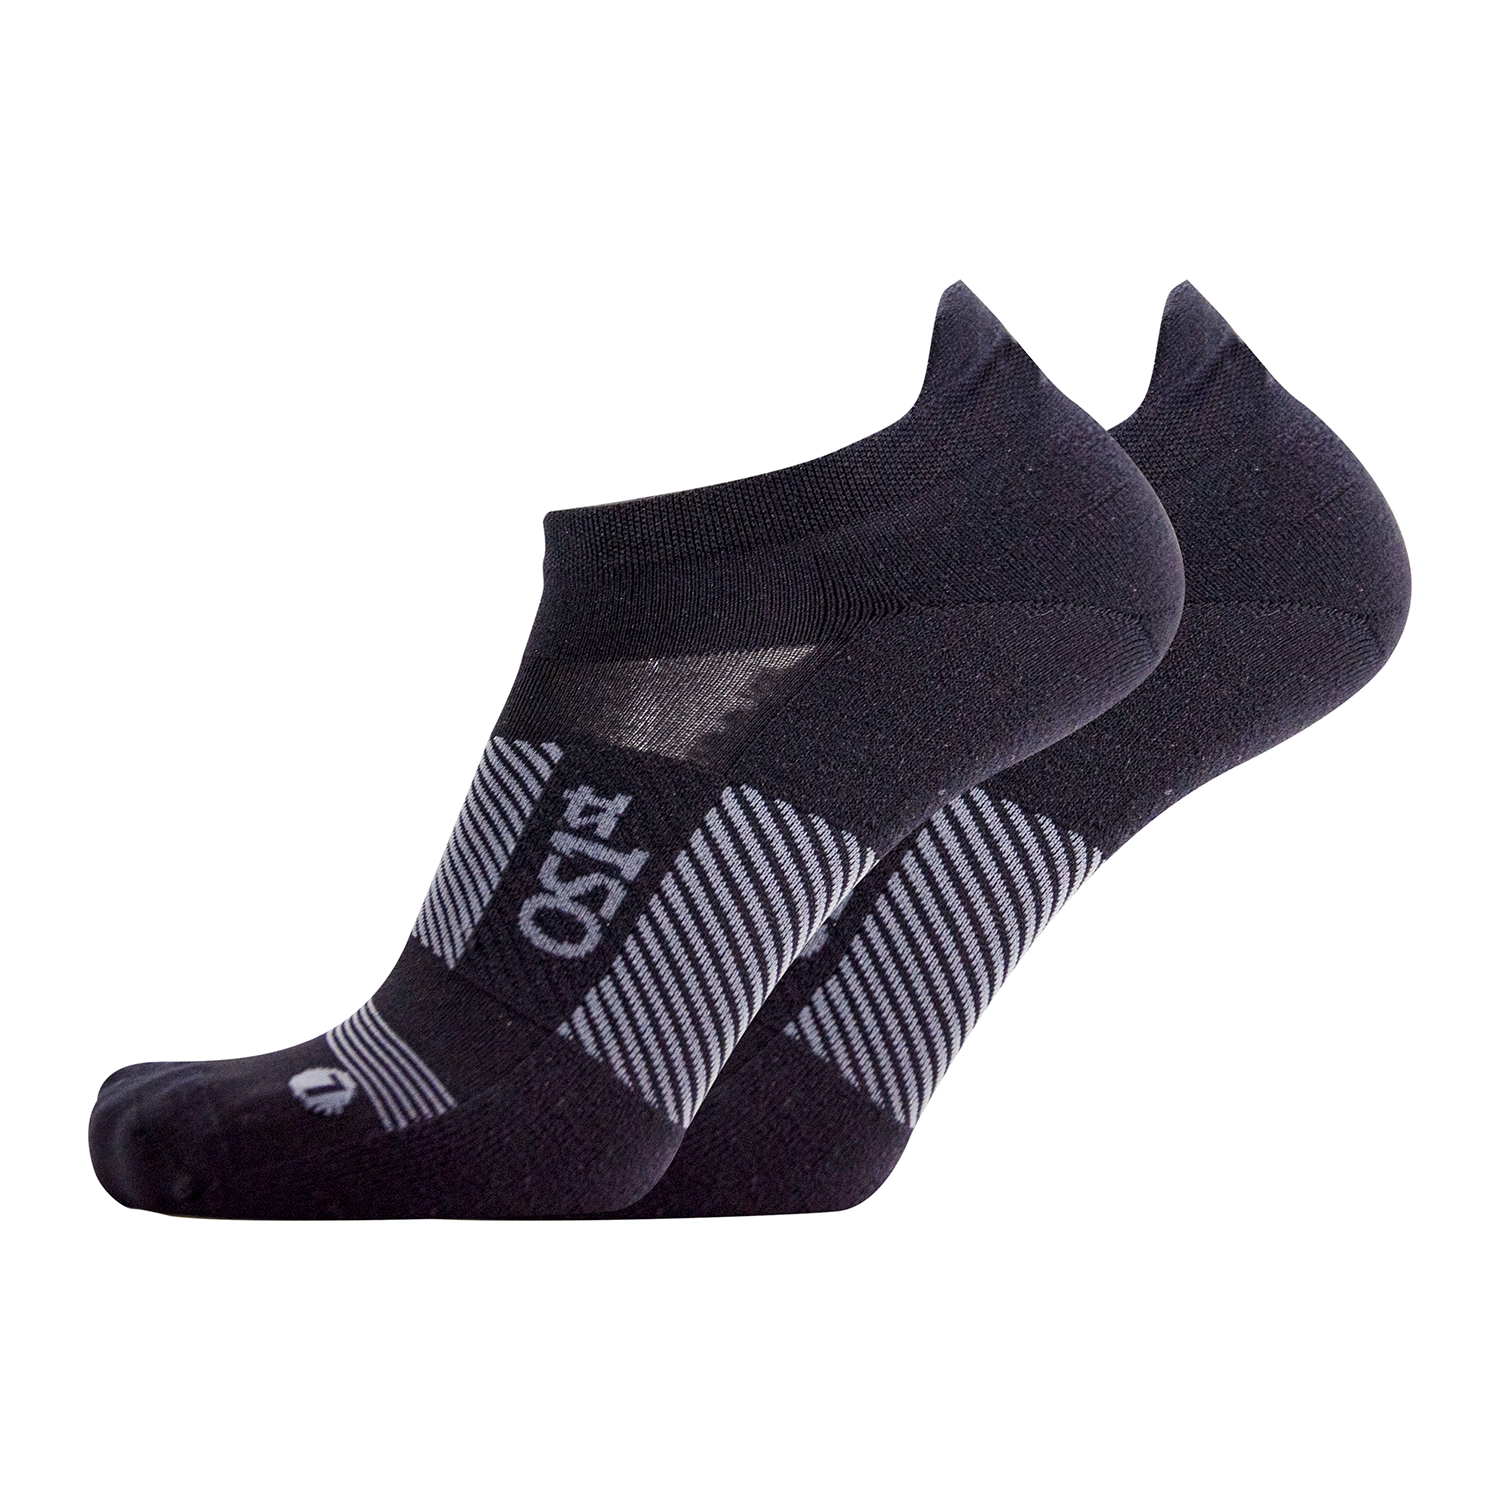 Thin air performance socks in black | OS1st